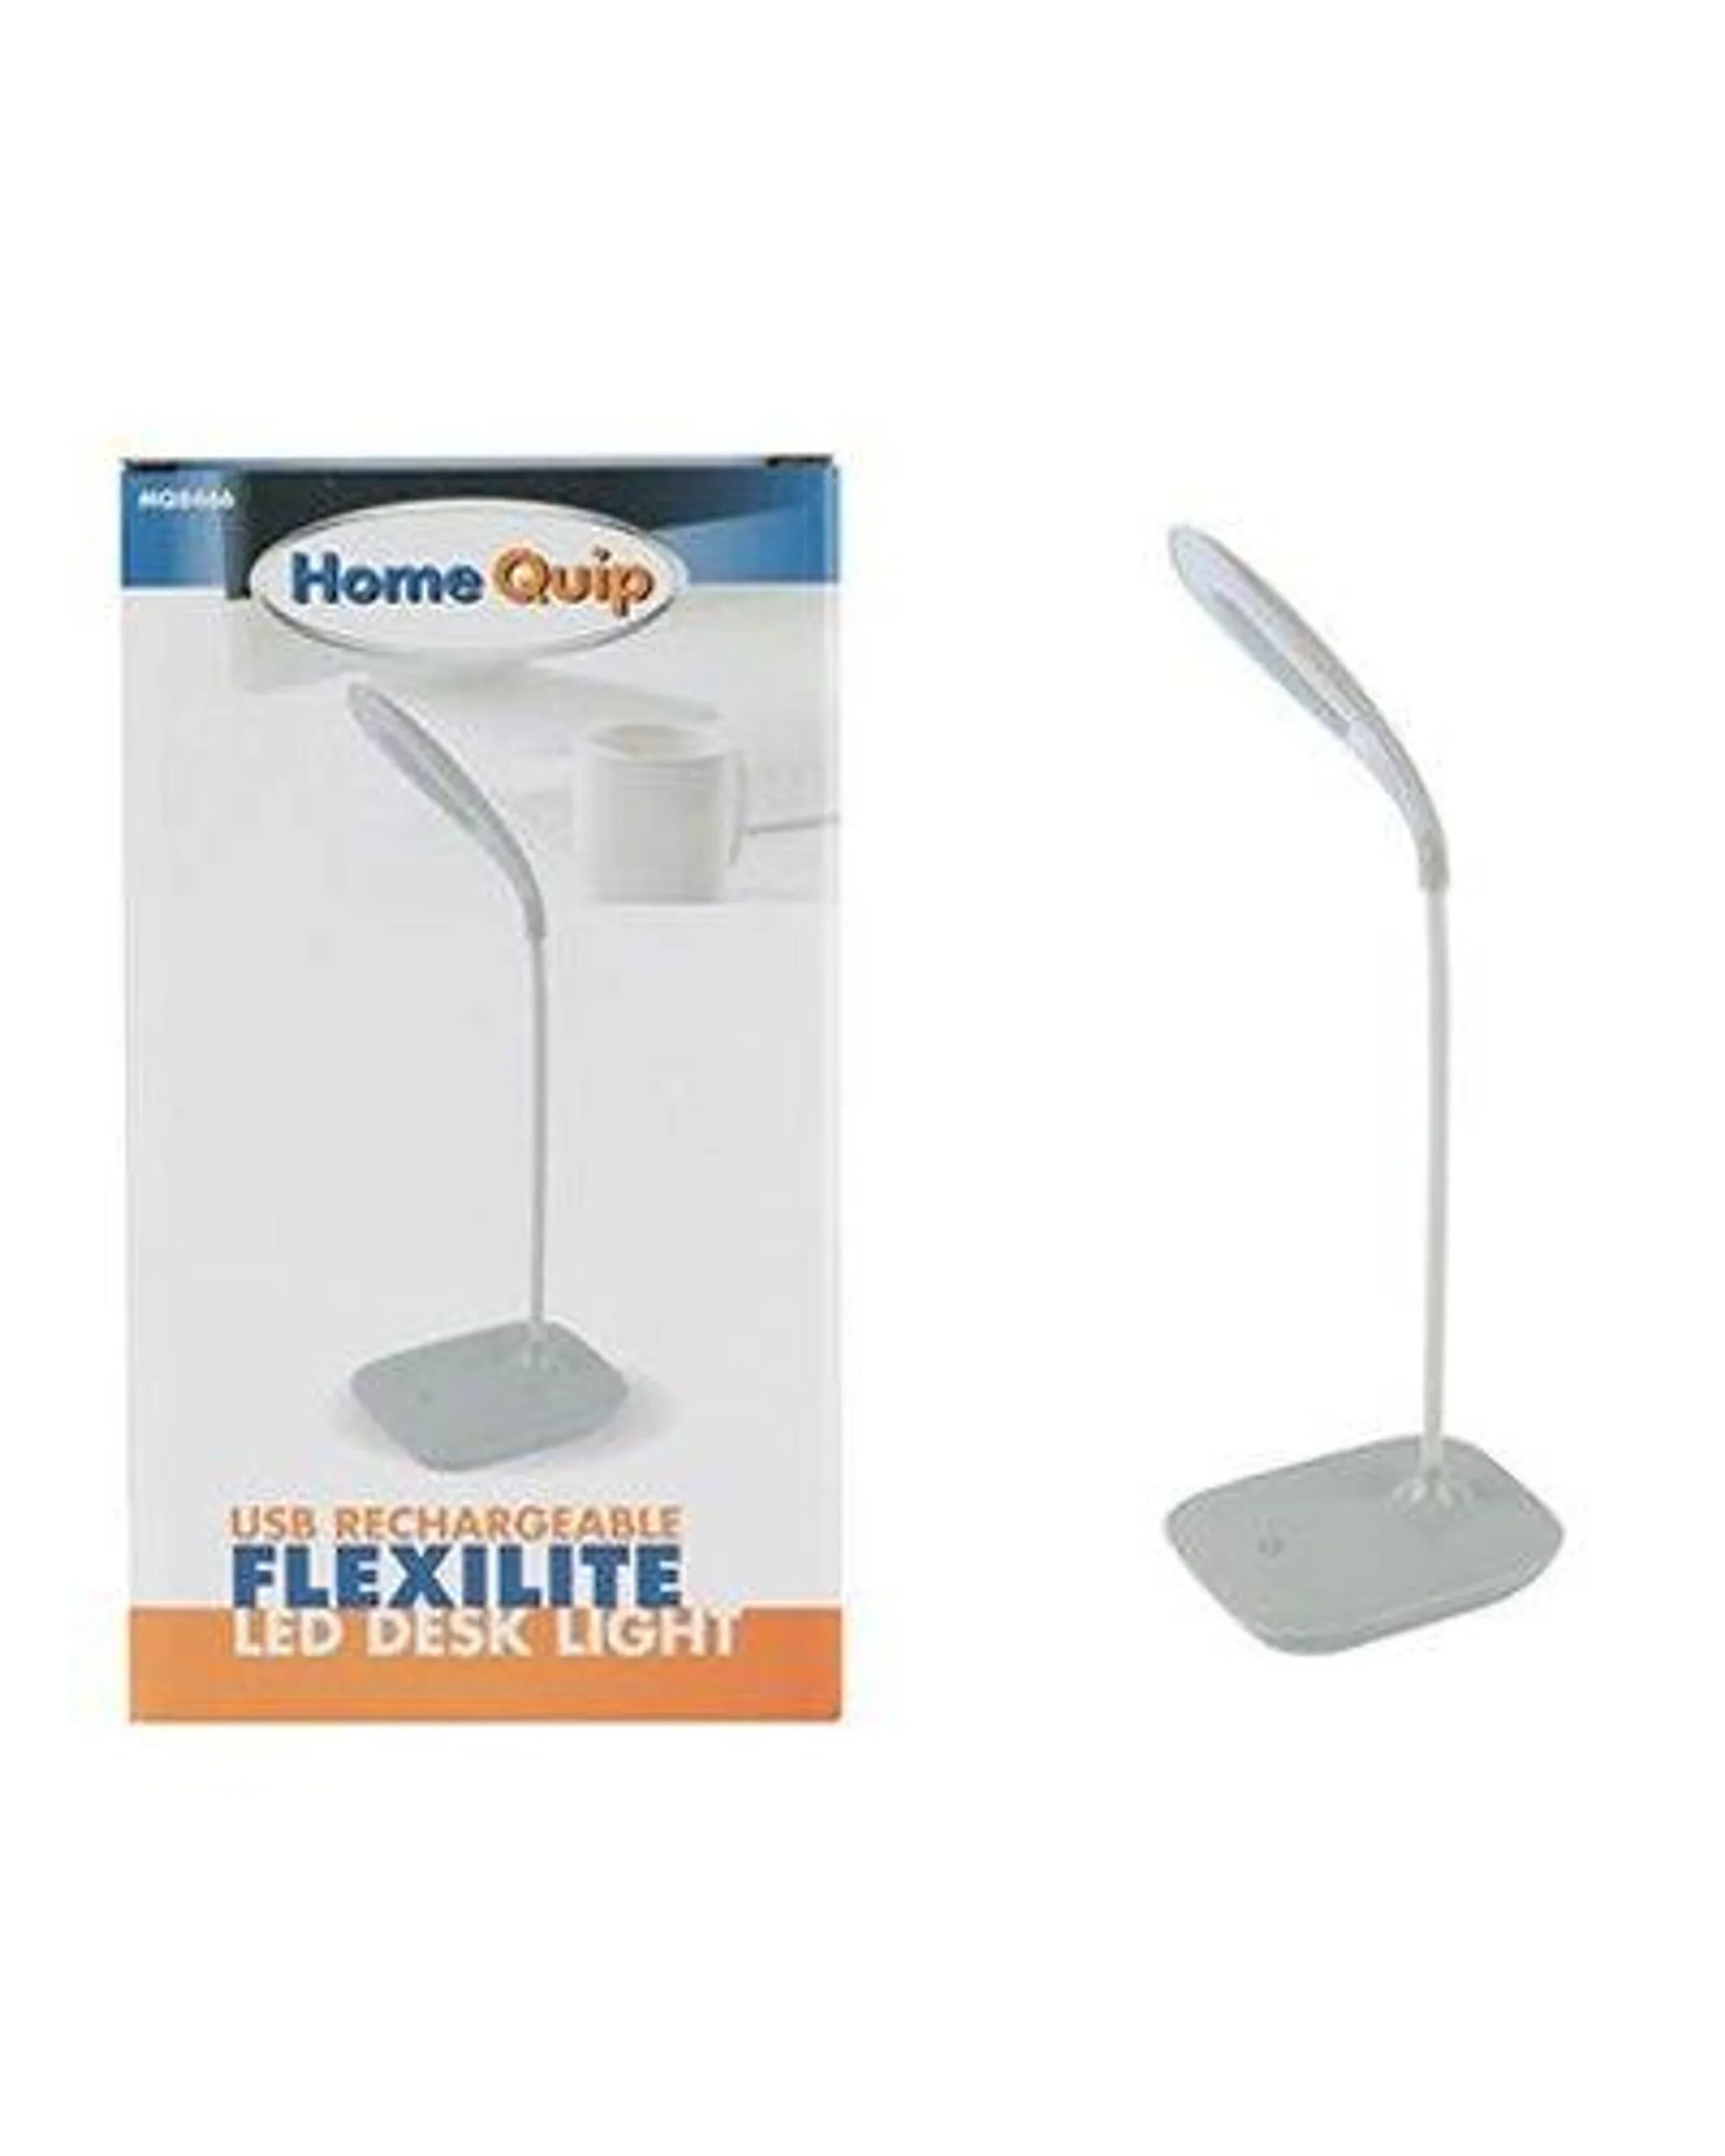 HomeQuip Flexilite Usb Rechargeable Flexible Desk Light (Grey)